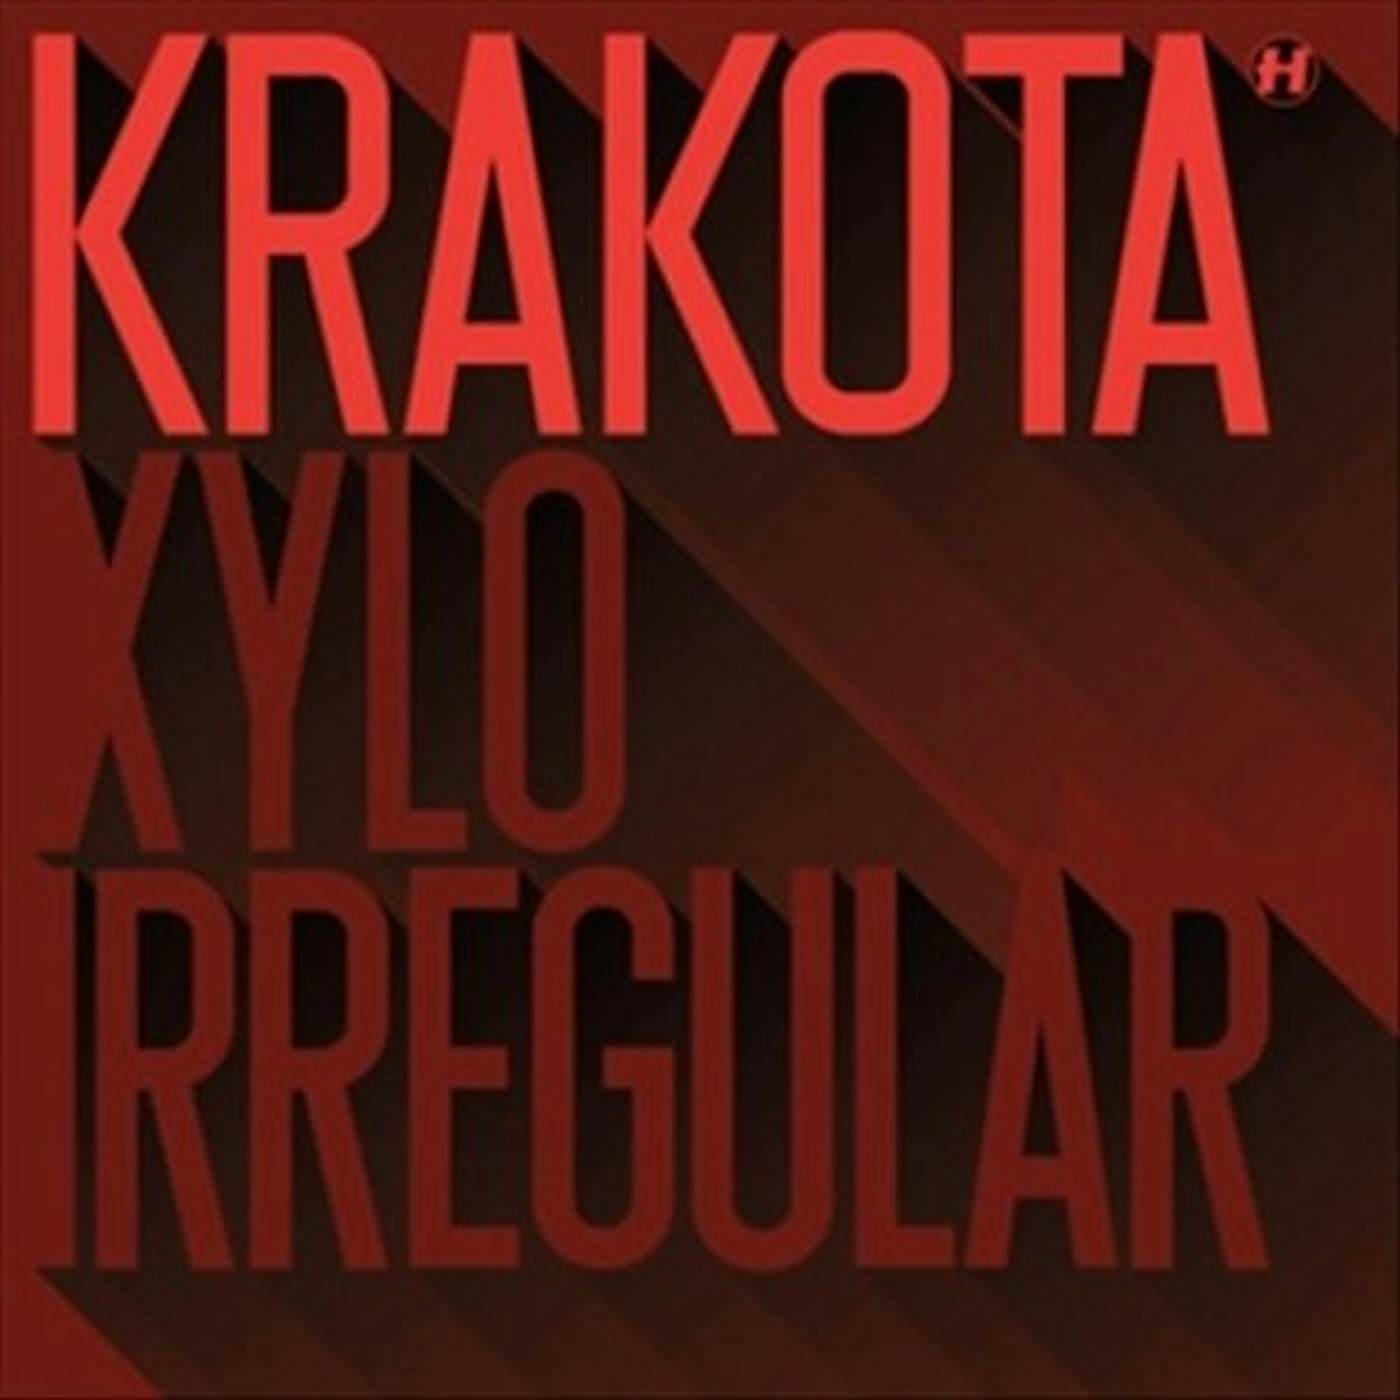 Krakota Xylo / Irregular Vinyl Record